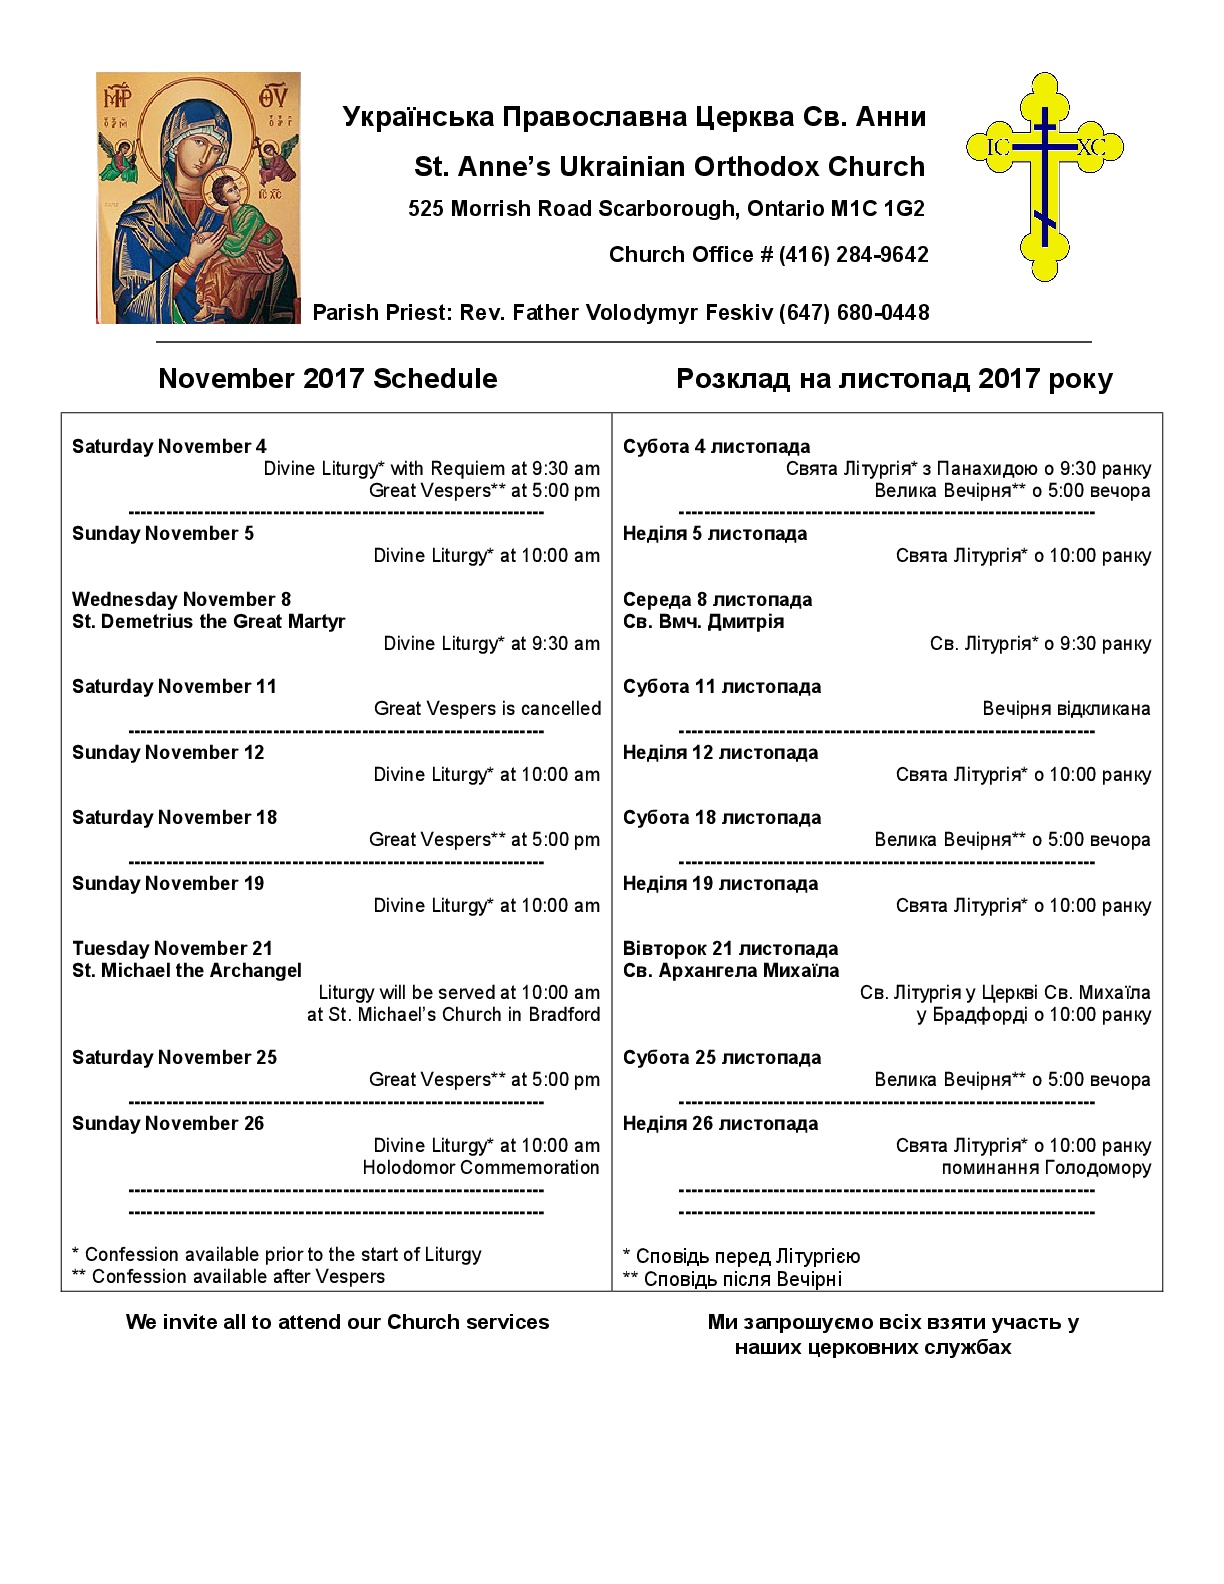 November 2017 schedule